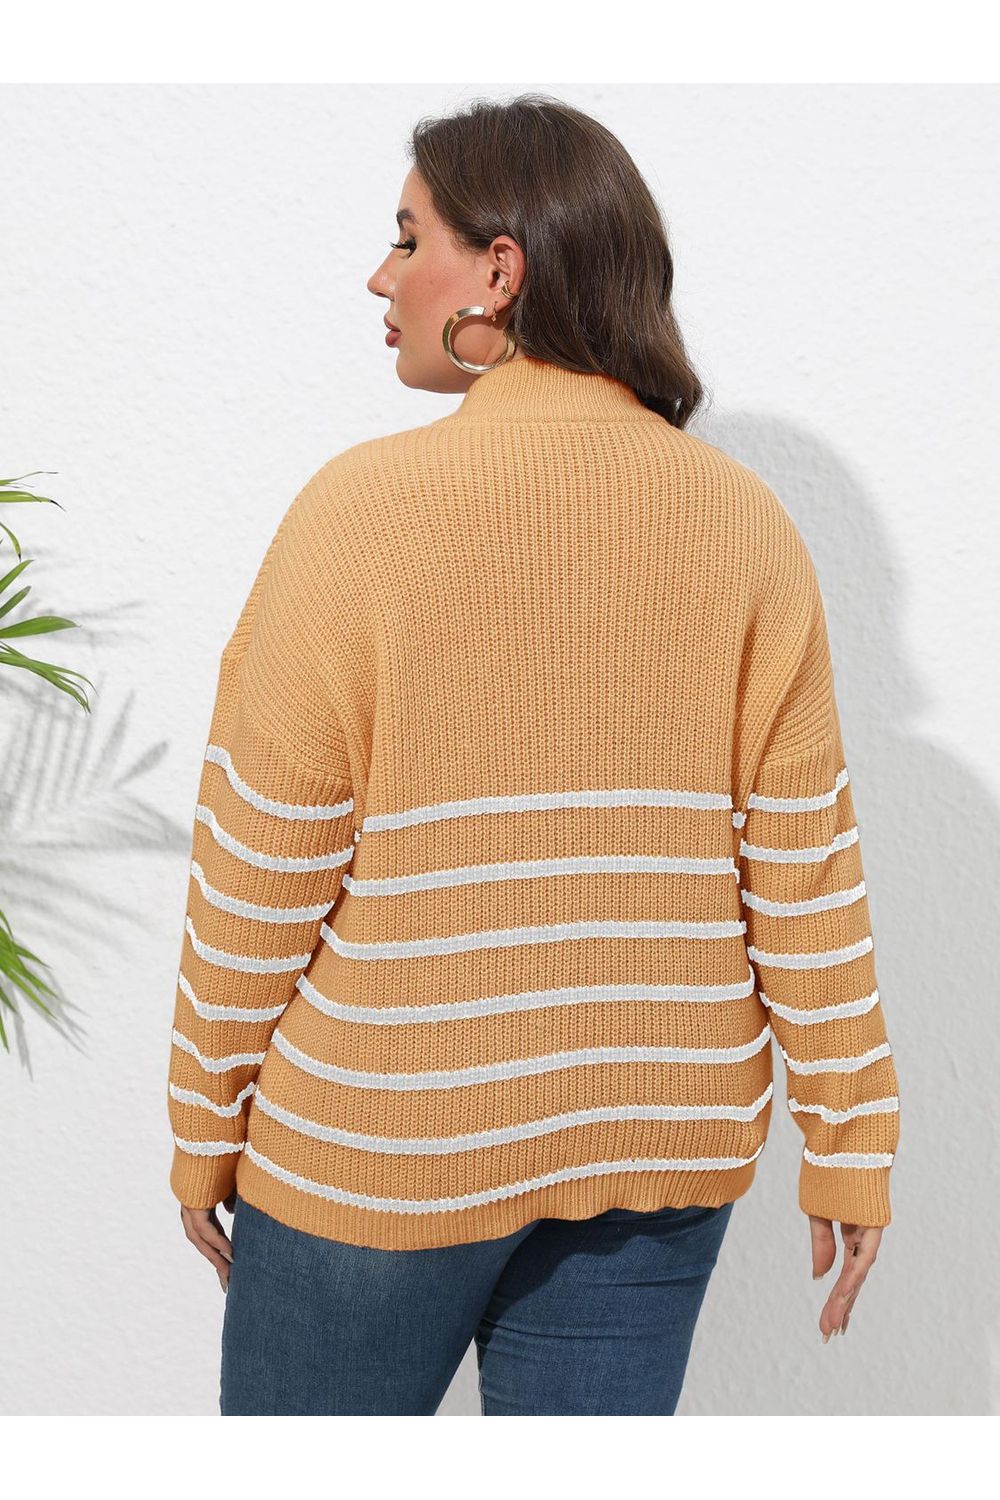 Plus Size Women Zip-Up Striped Sweater